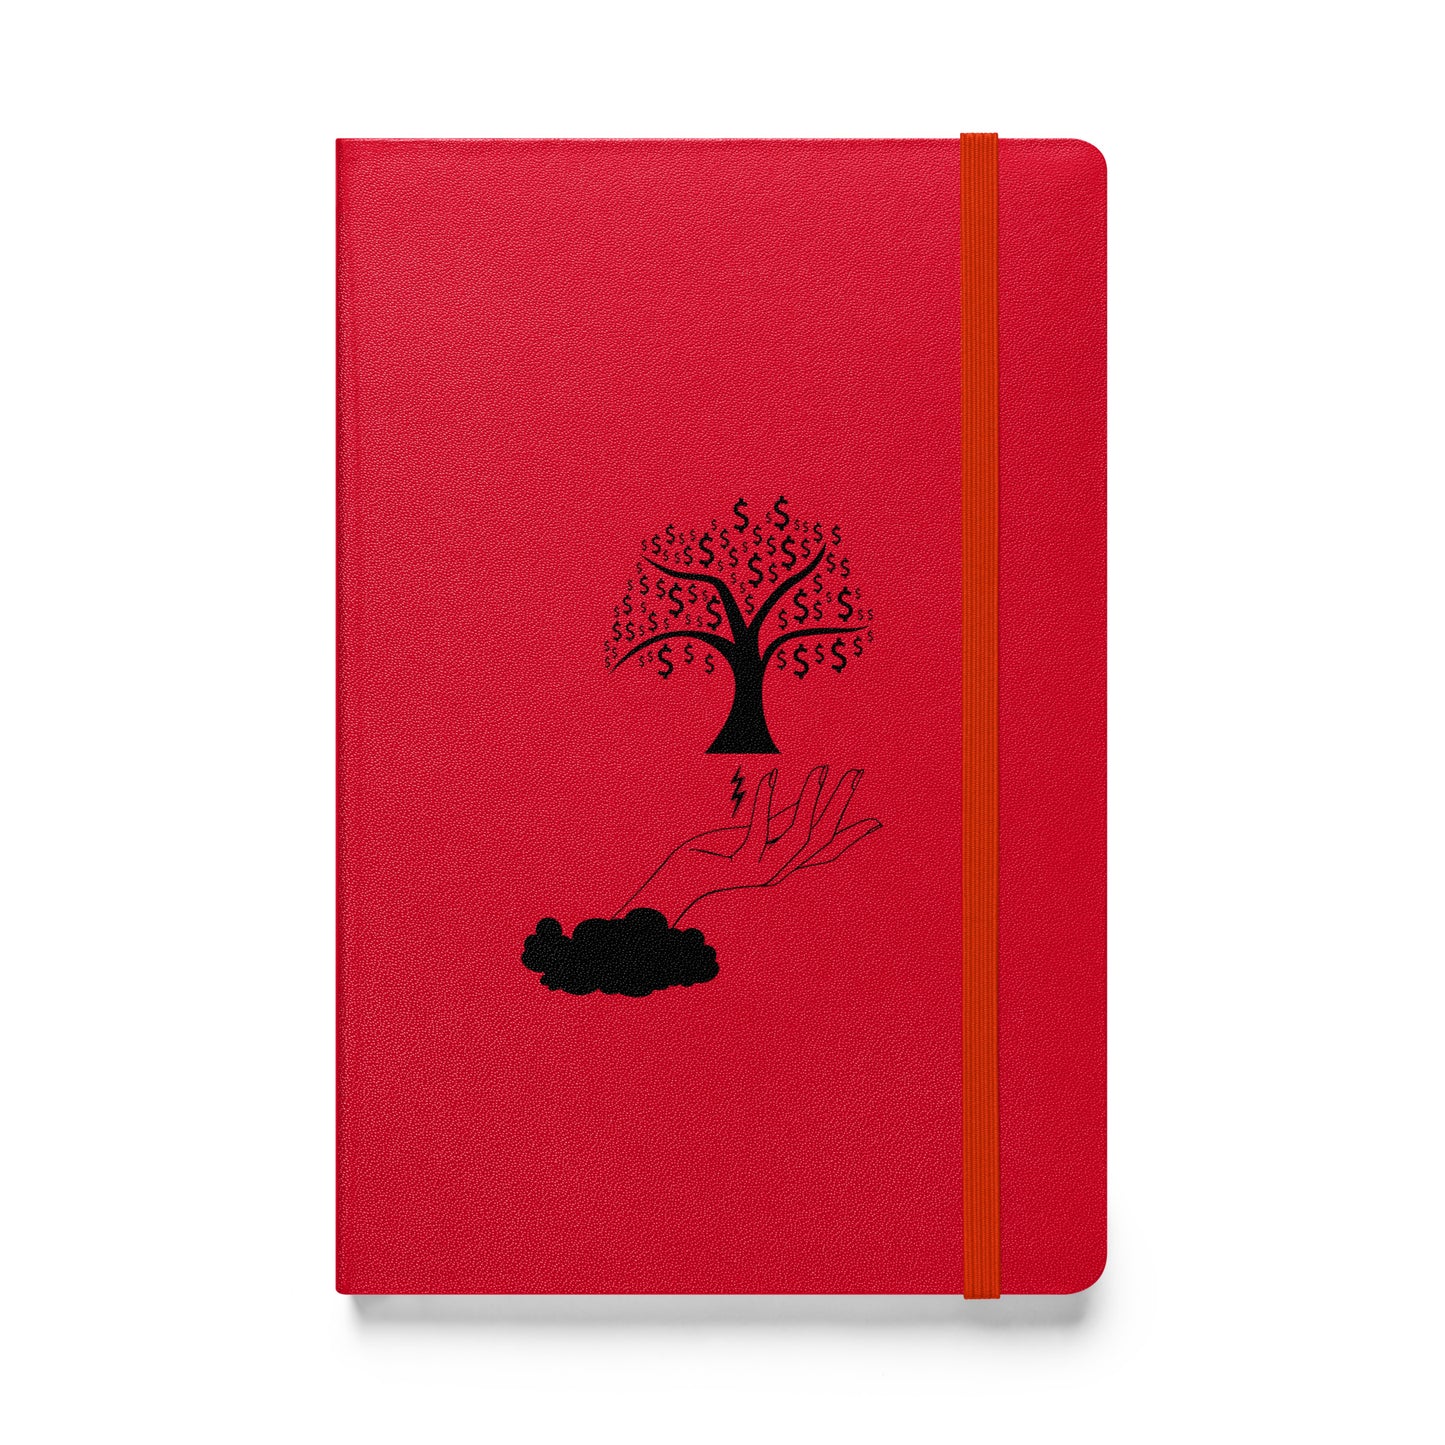 Manifesting Money Trees notebook